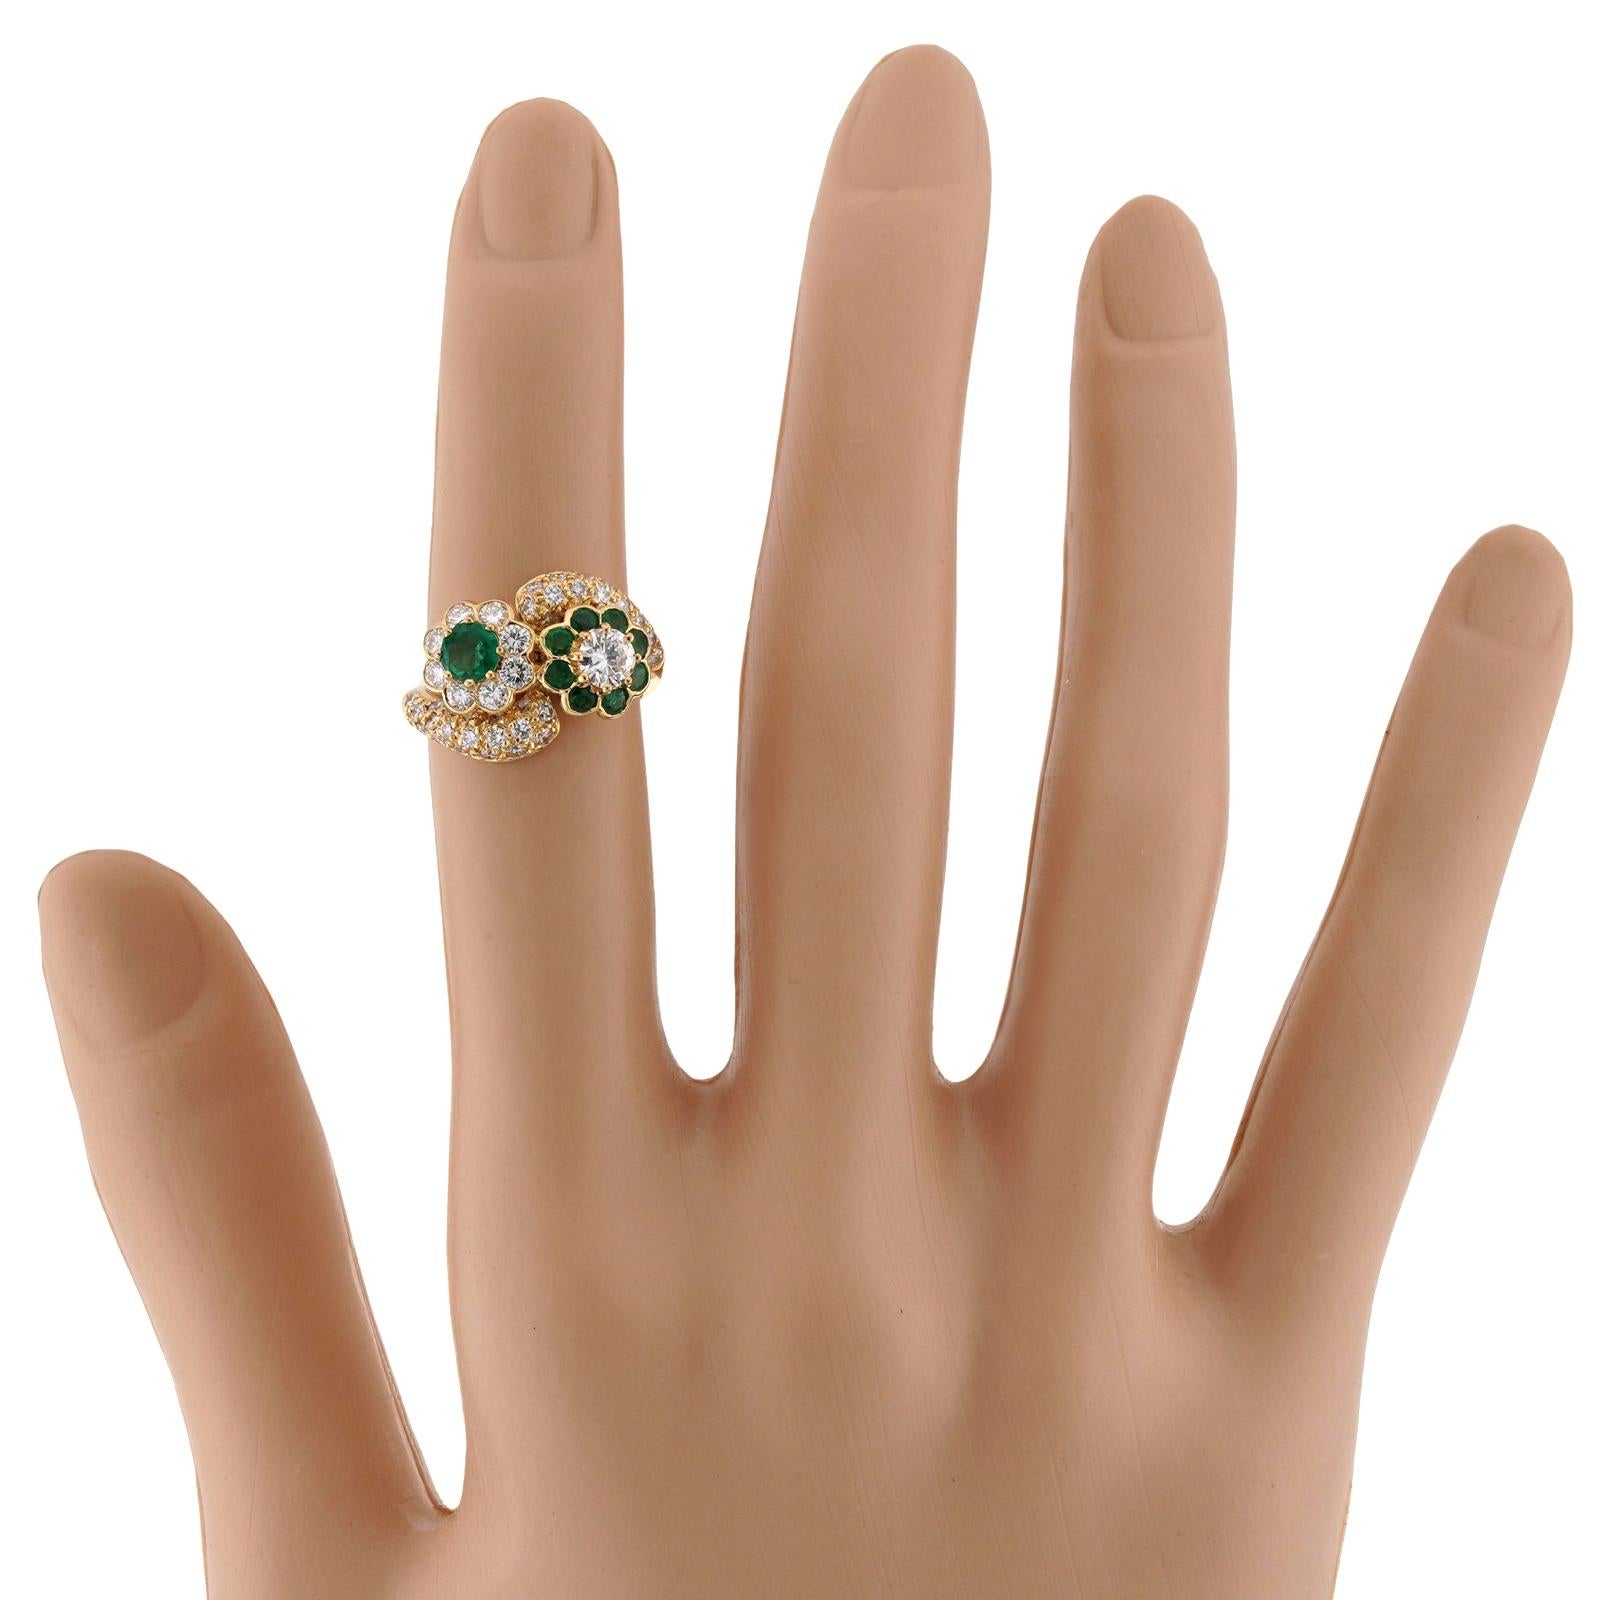 Brilliant Cut GRAFF Emerald Diamond 18k Yellow Gold Bypass Ring For Sale